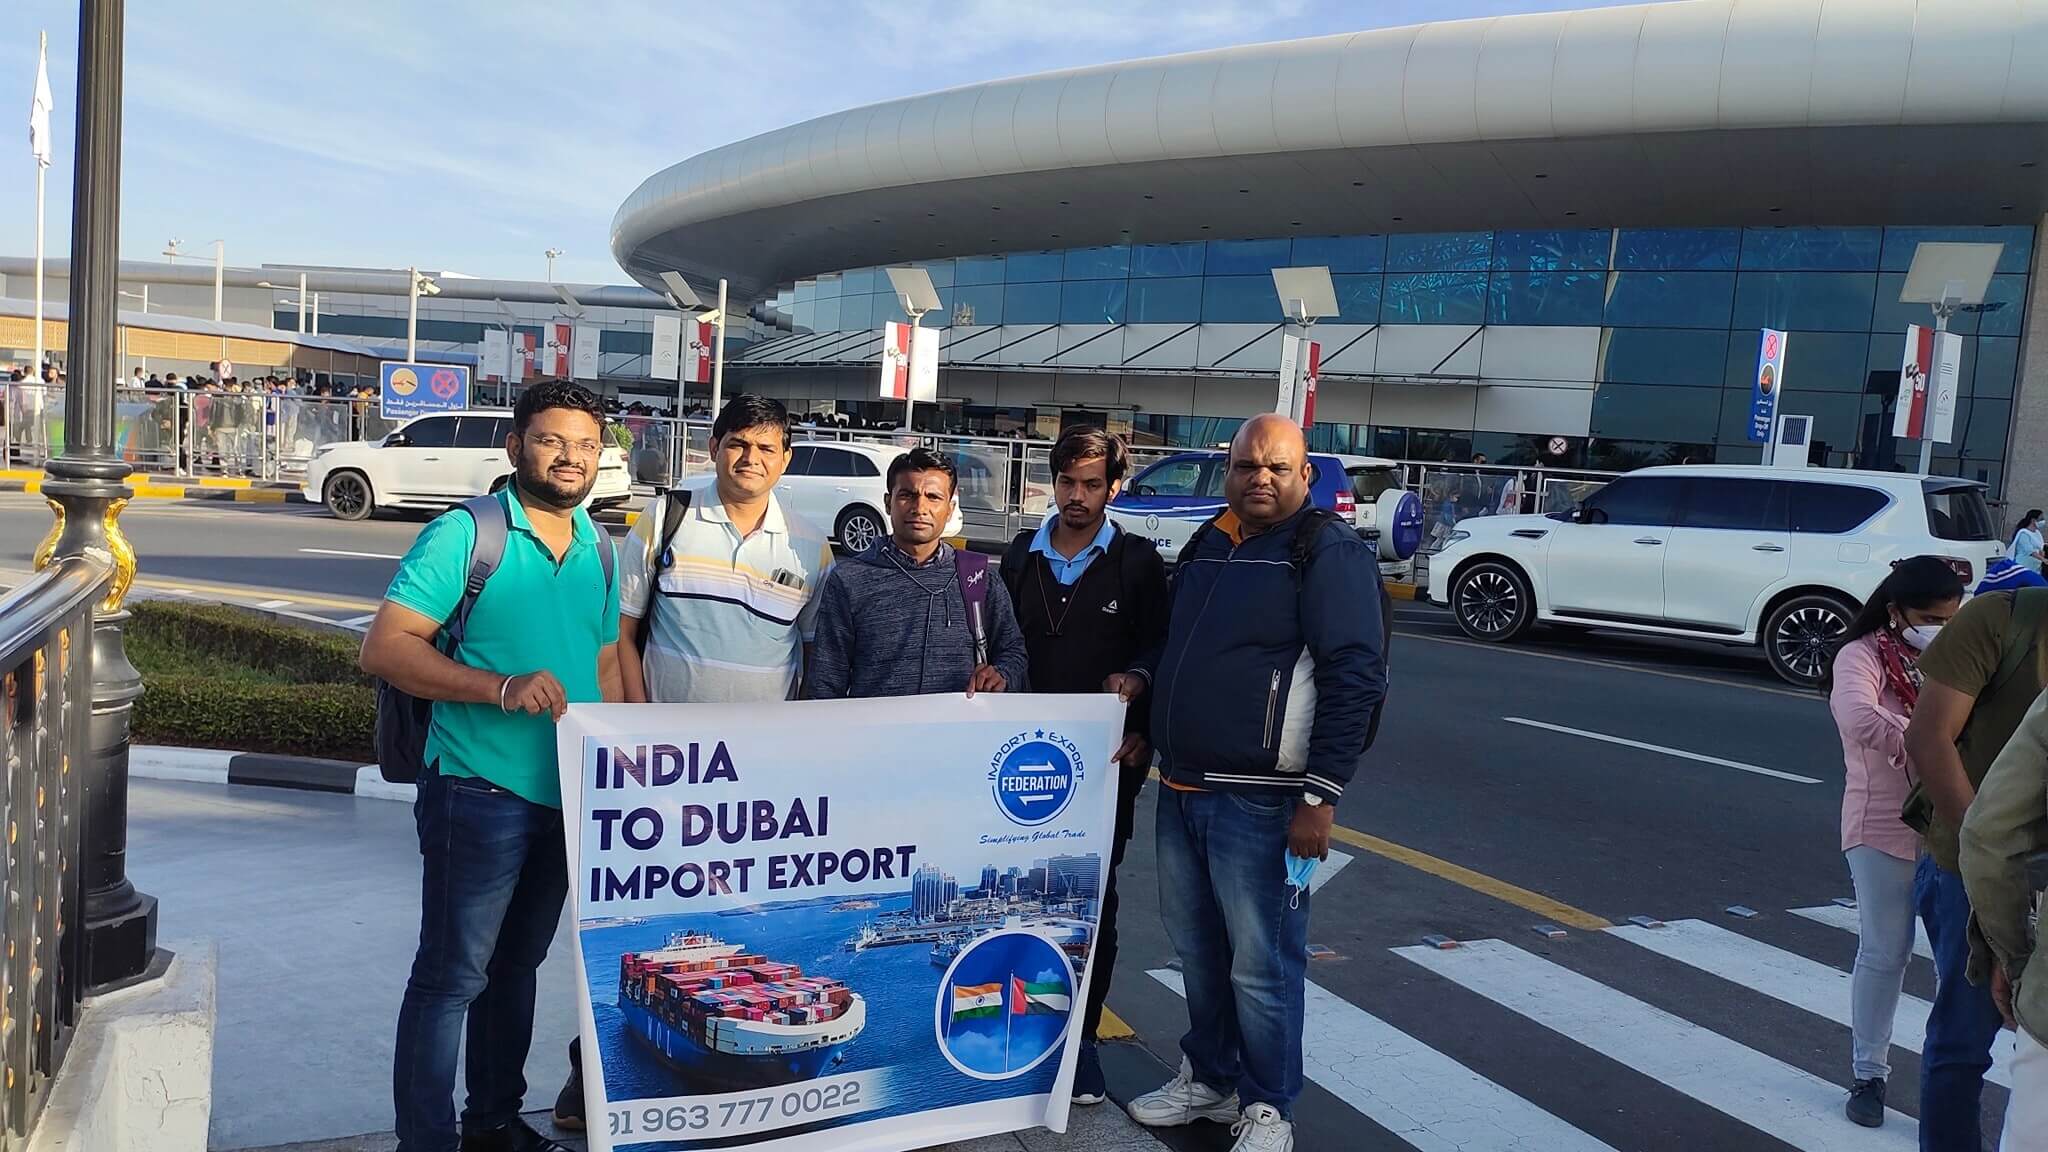 Dubai Import Export Tour